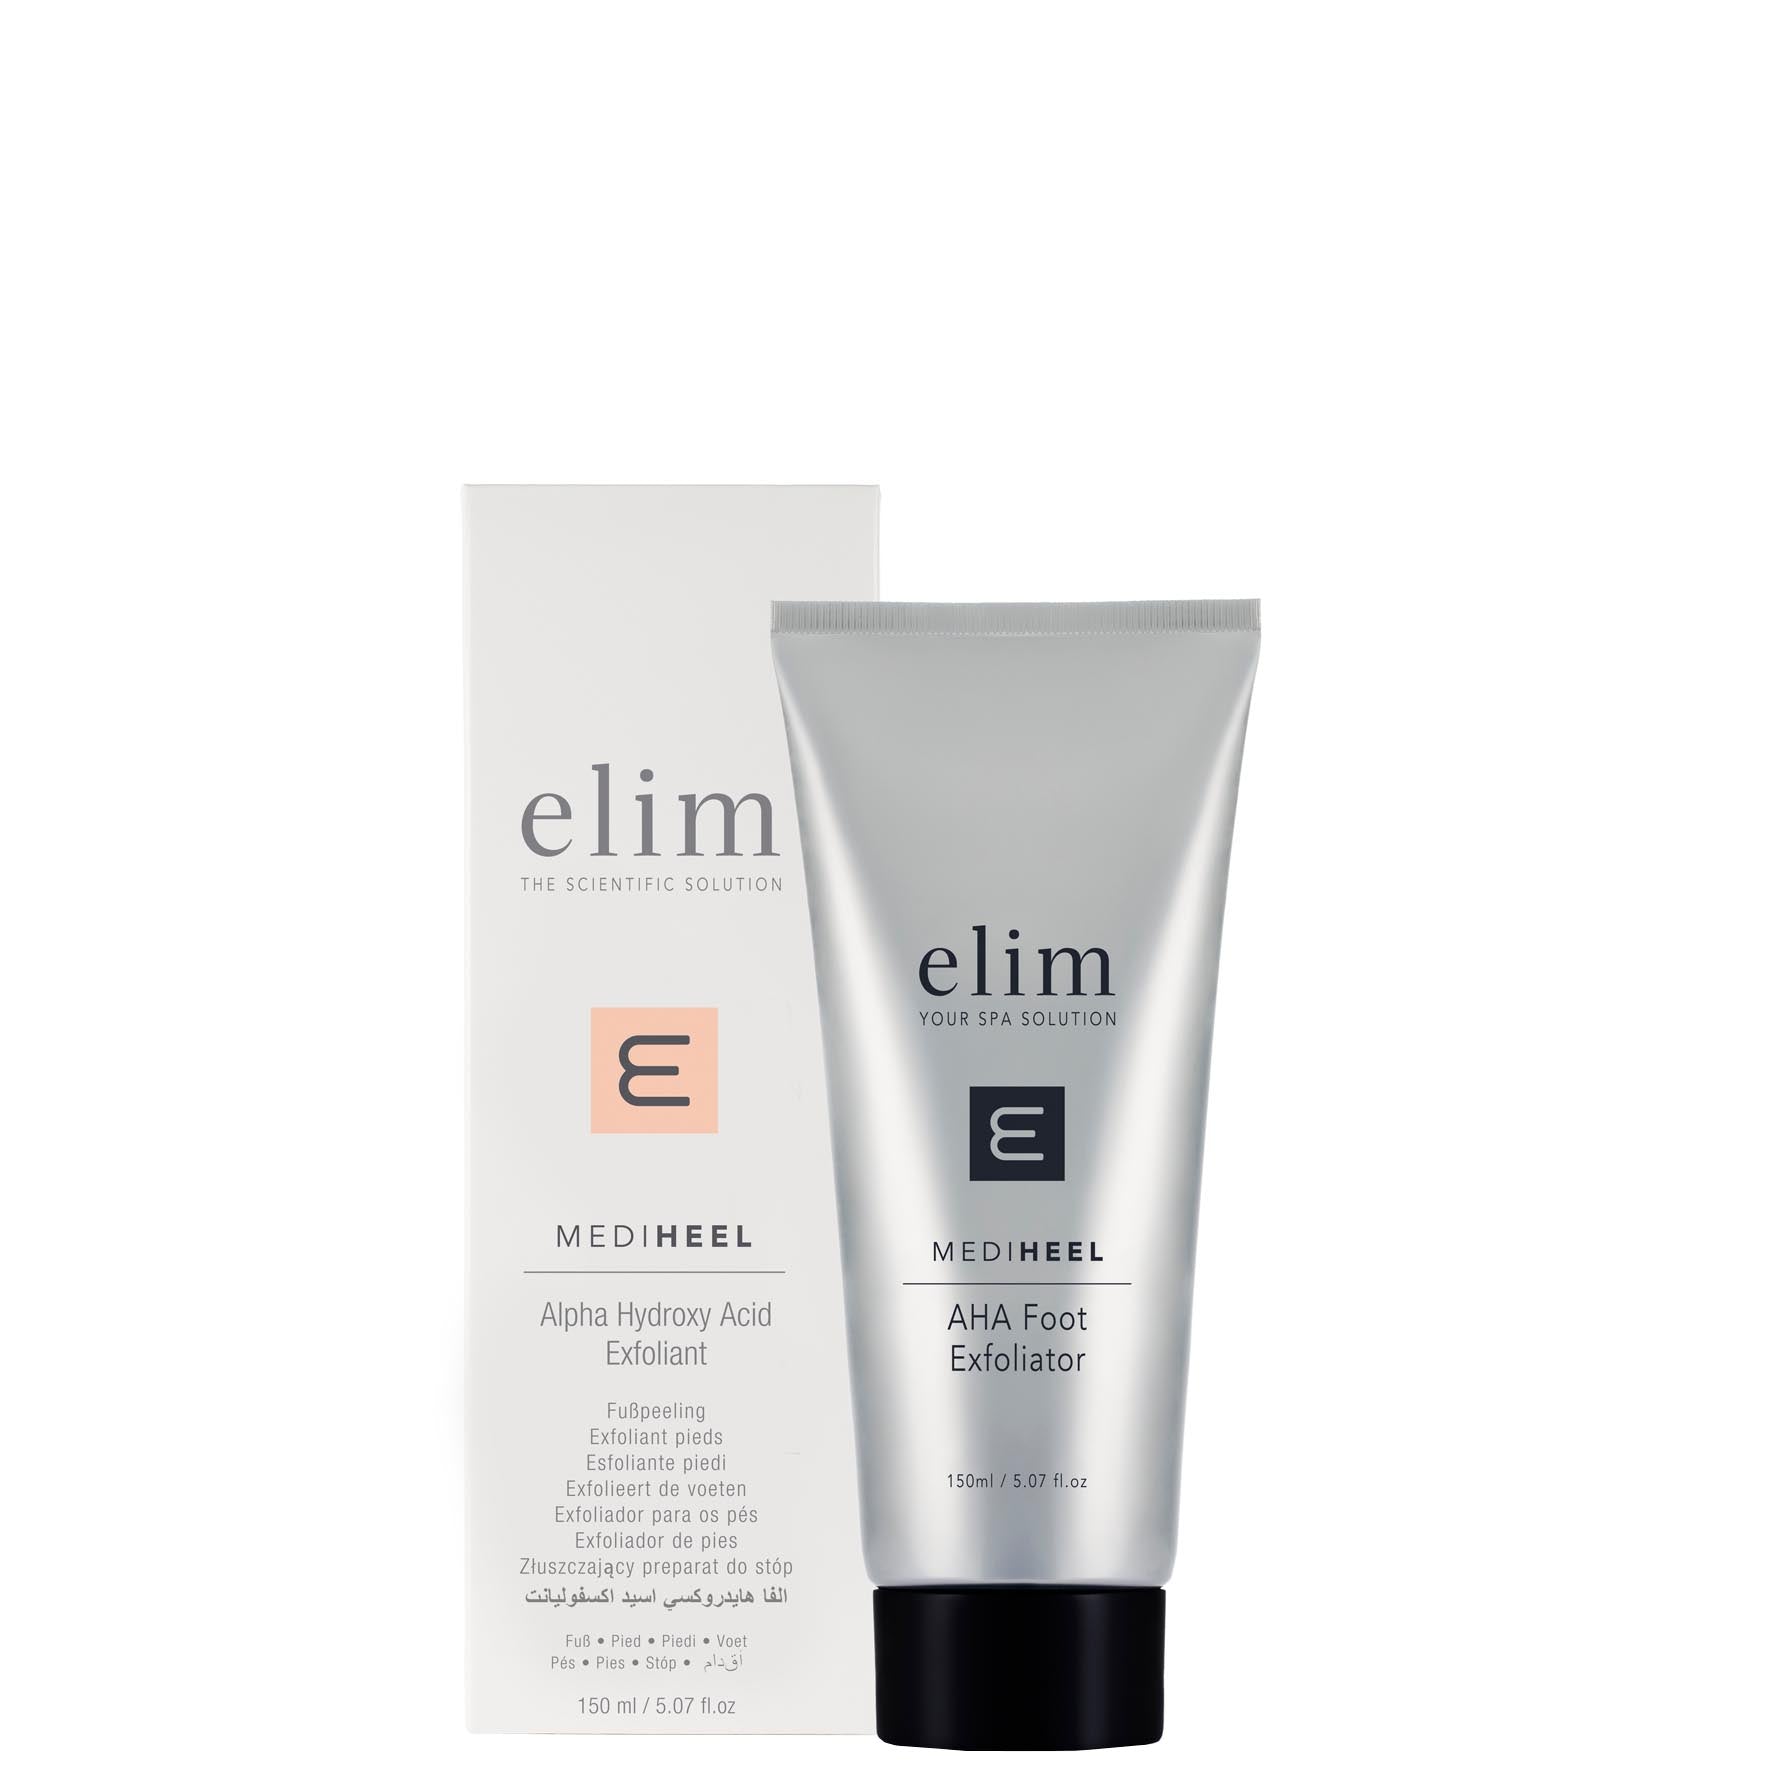 Silver tube of Elim MediHeel AHA Foot Exfoliant